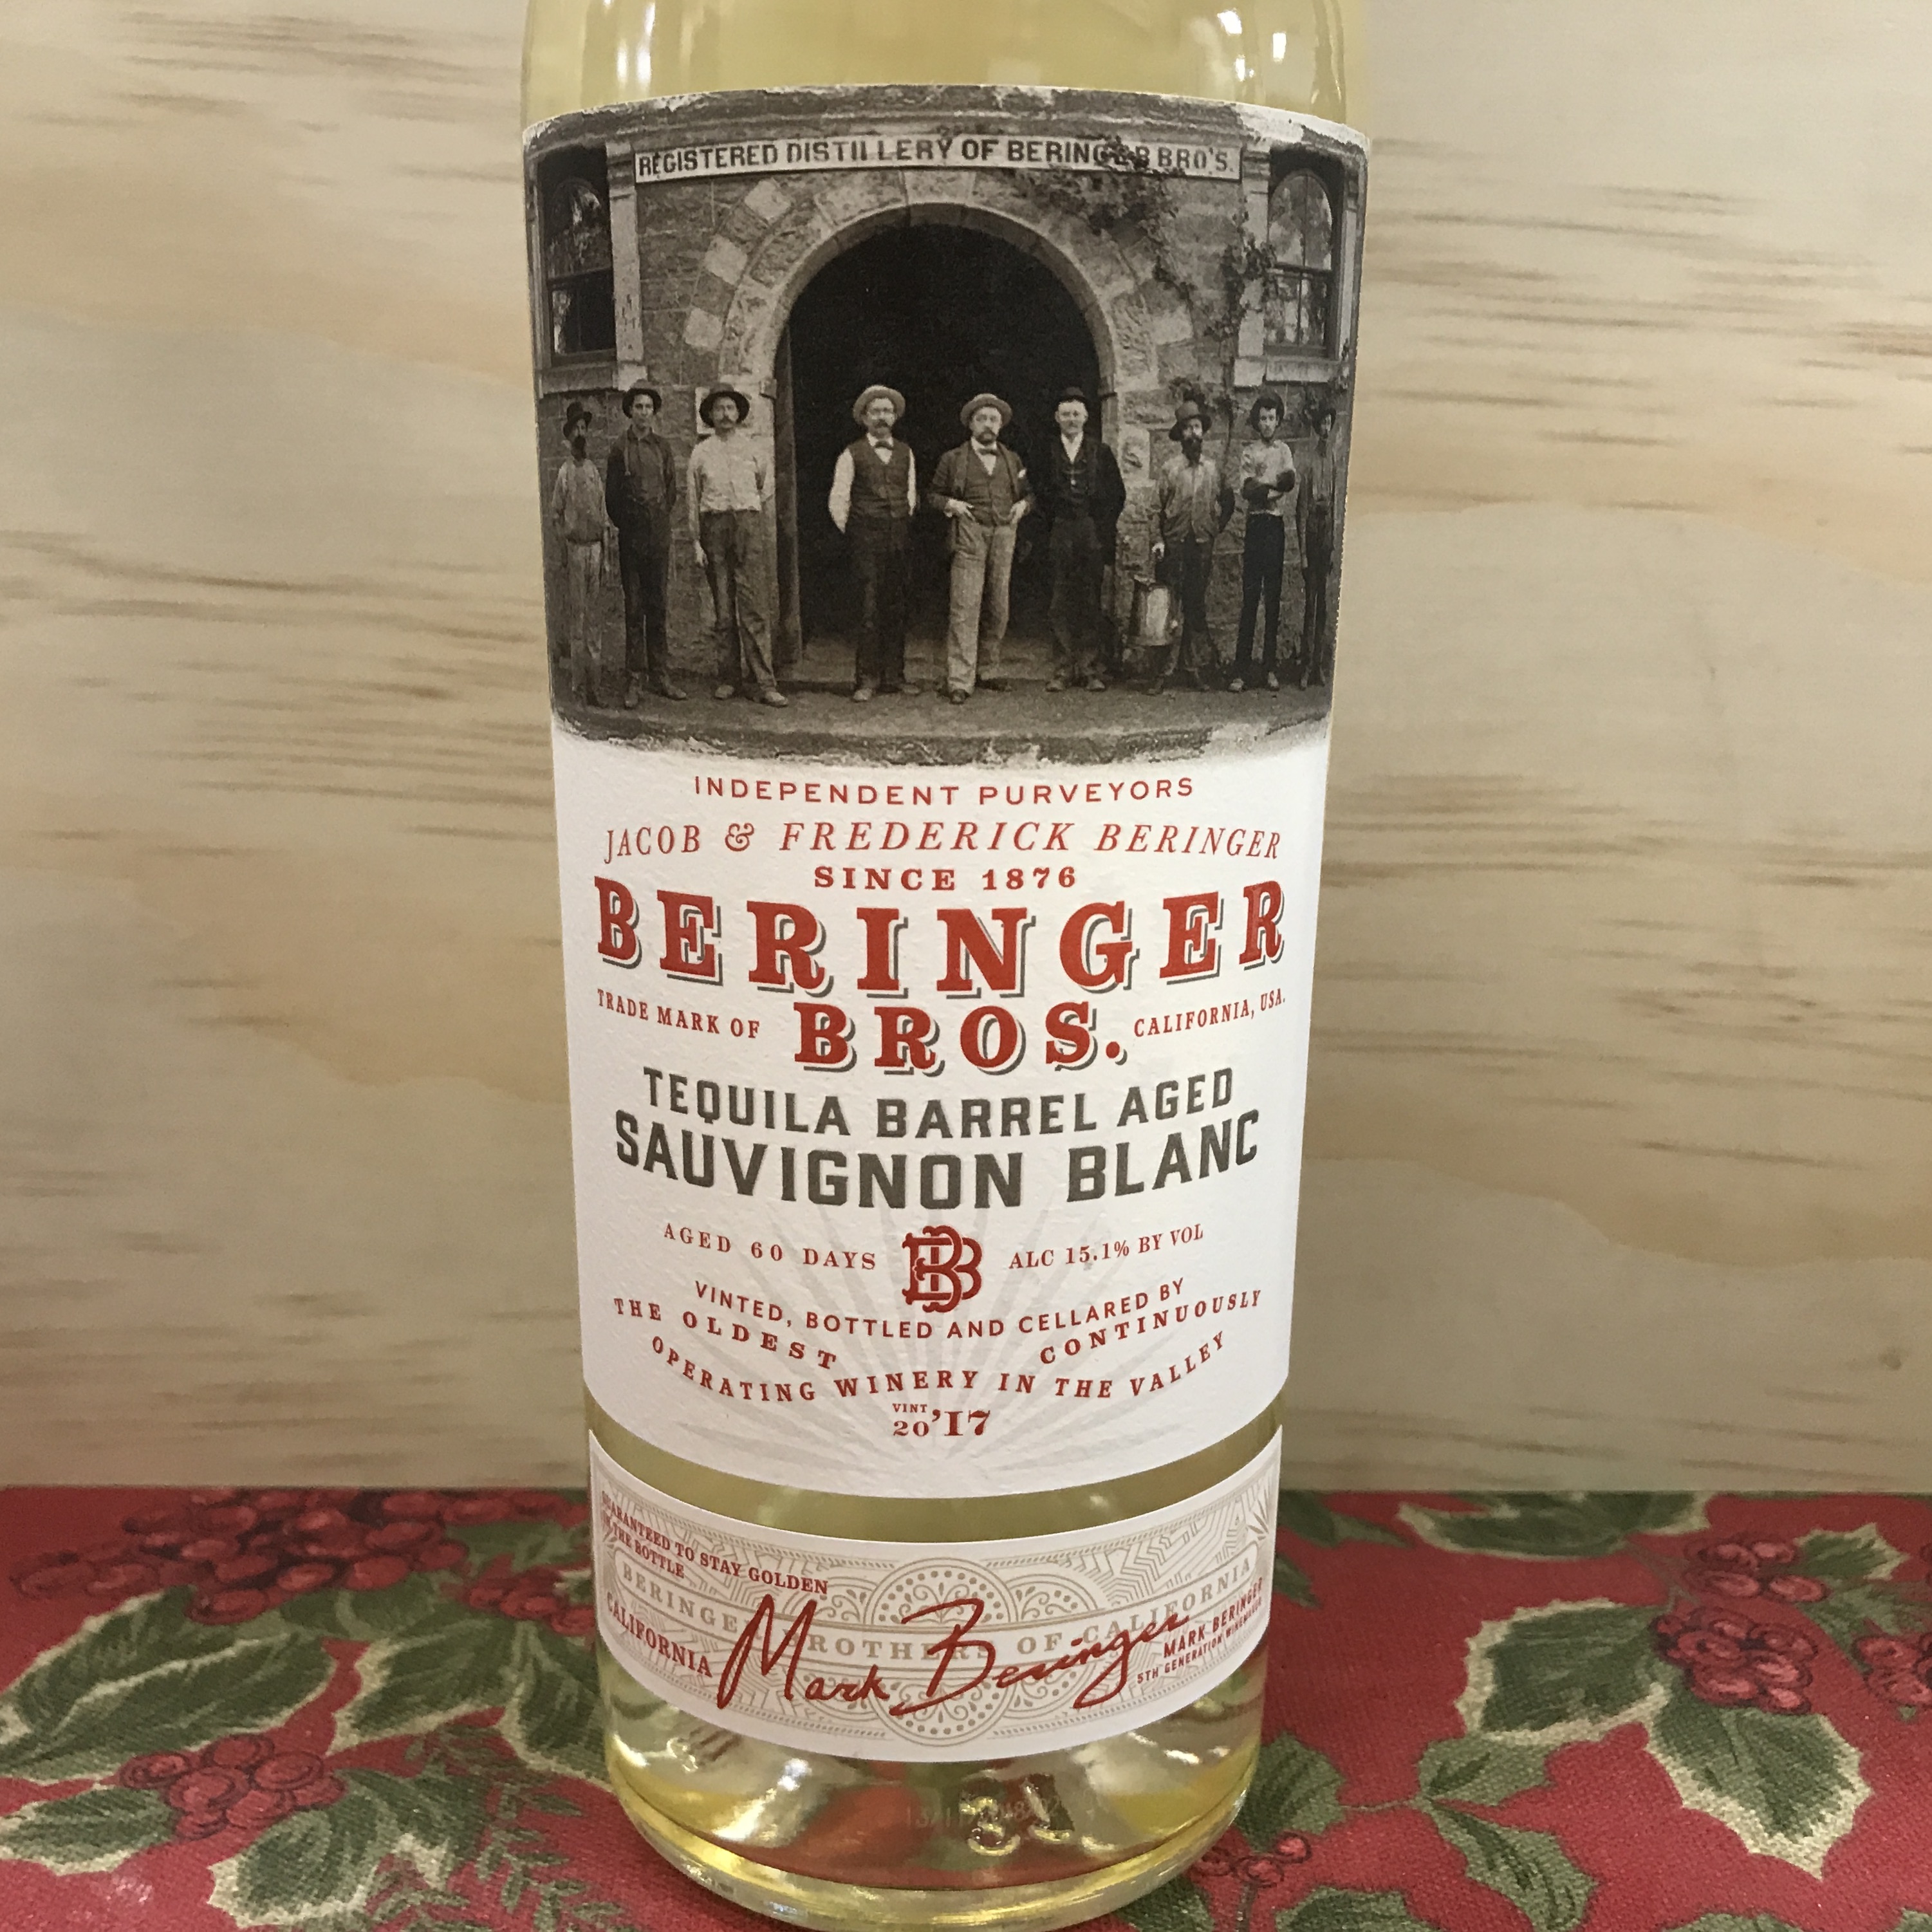 Beringer Bros.Tequila Barrel aged Sauvignon Blanc 2017